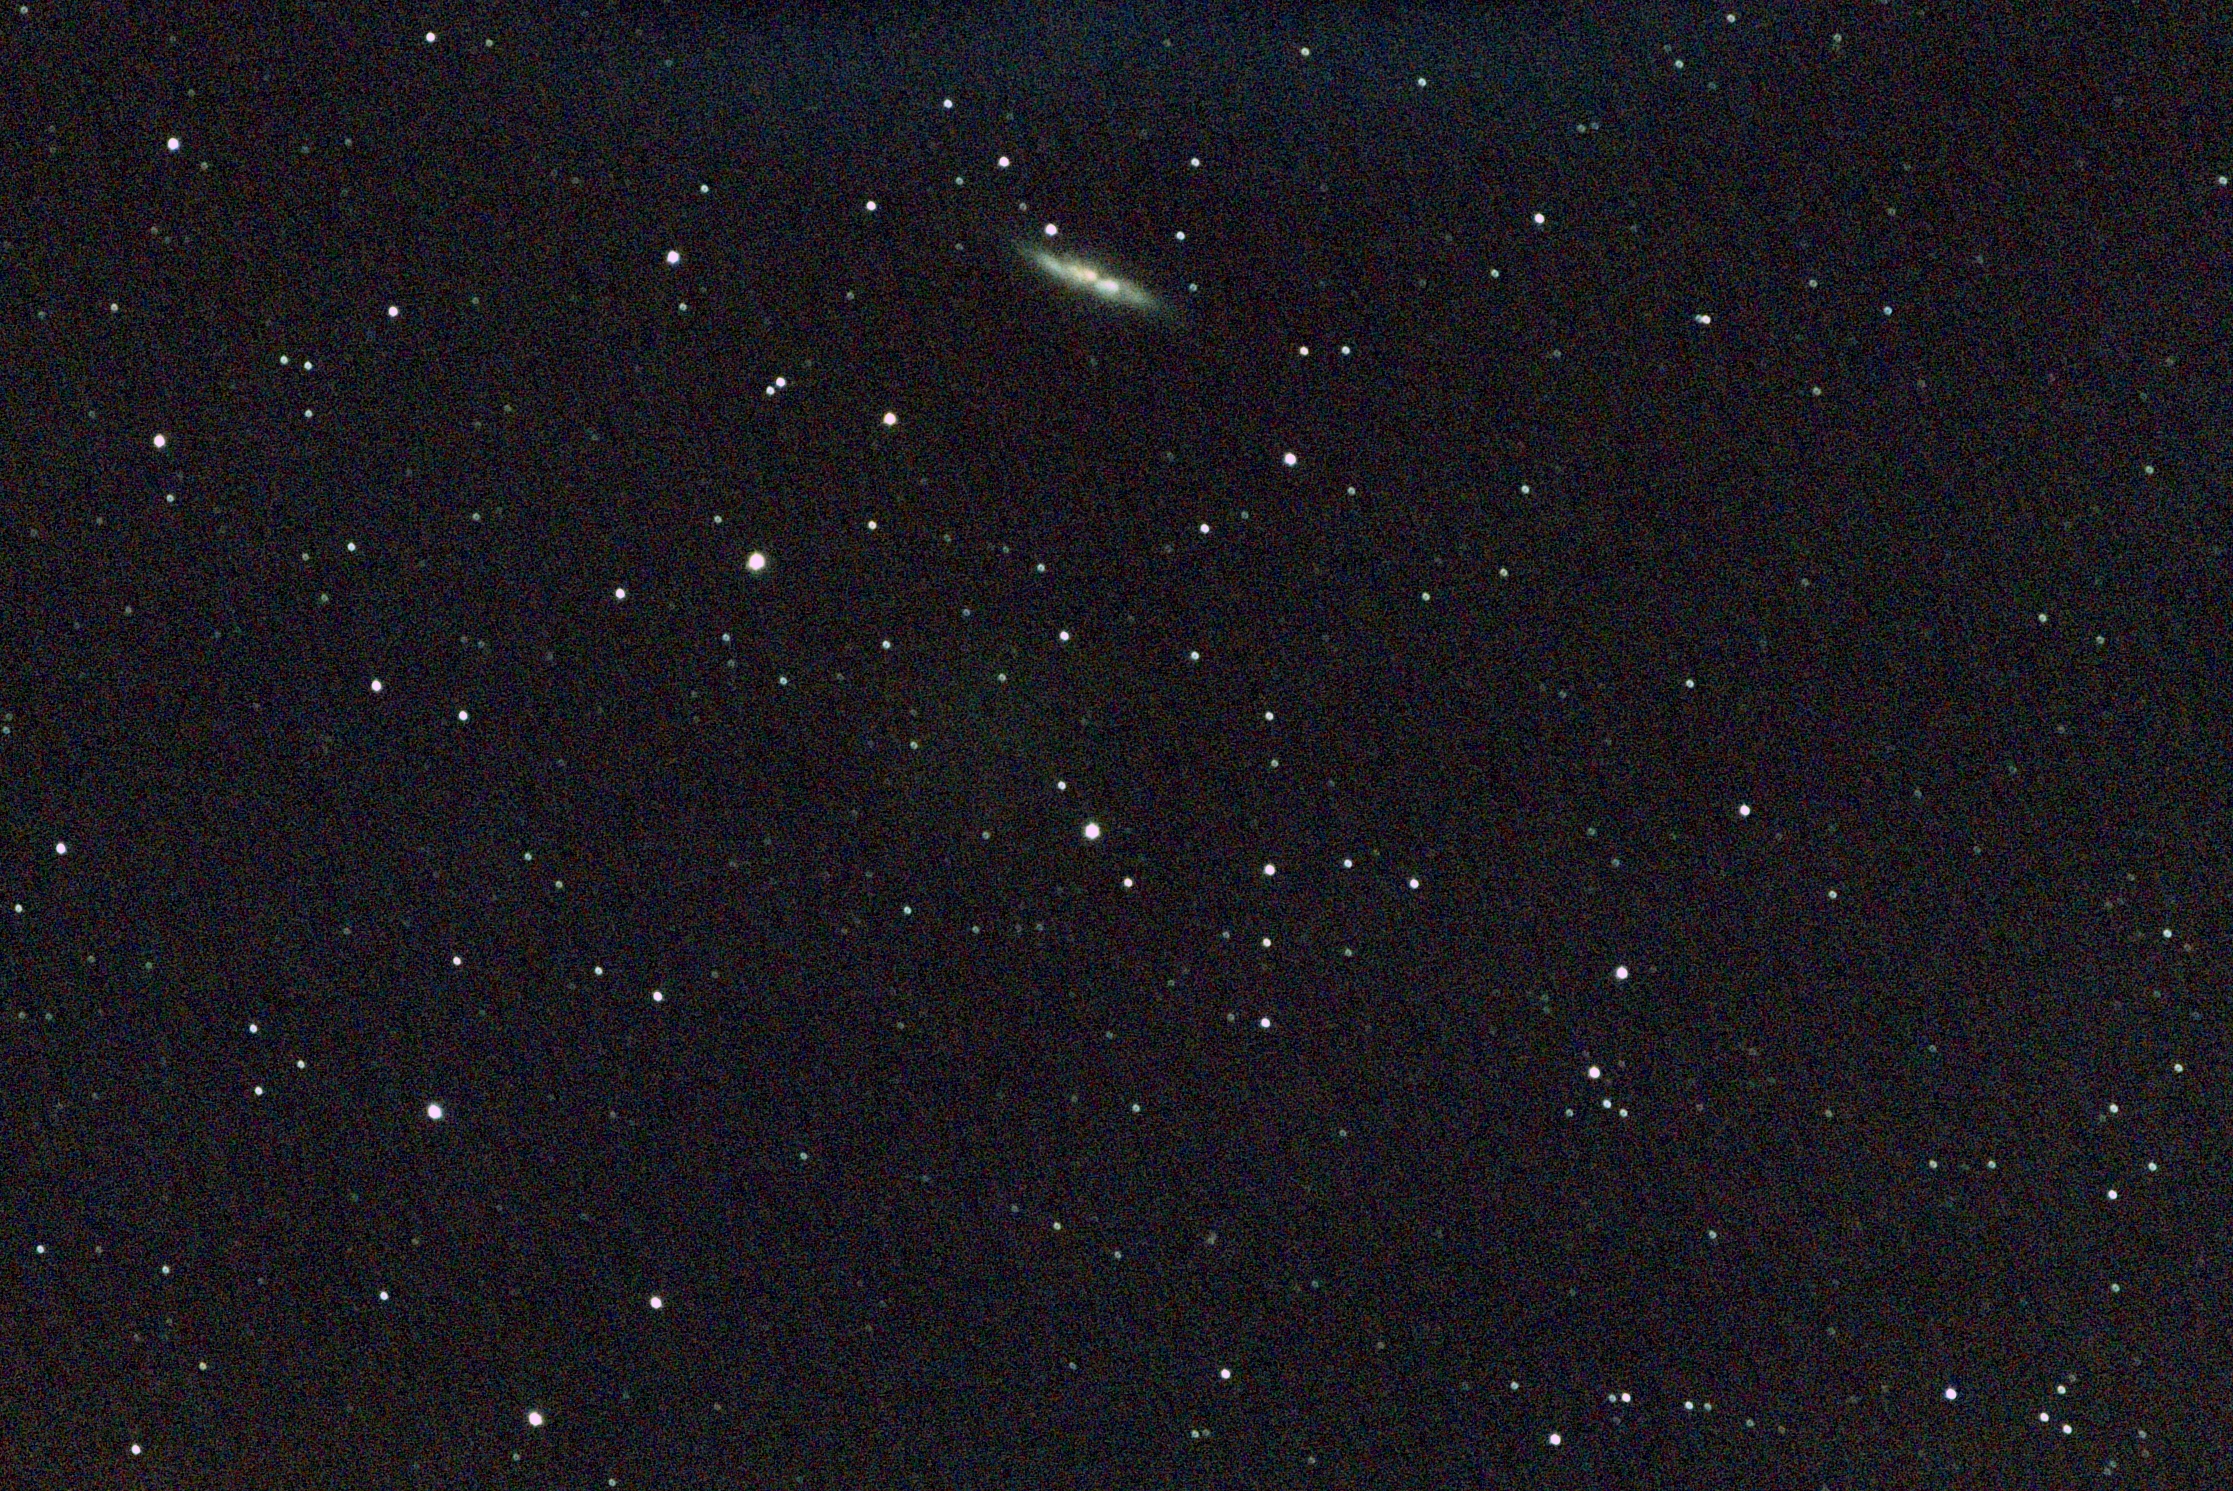 /img/astrophoto/CC_BY_SA_aurelien_genin/20230624_M82 (600mm + R6).jpg